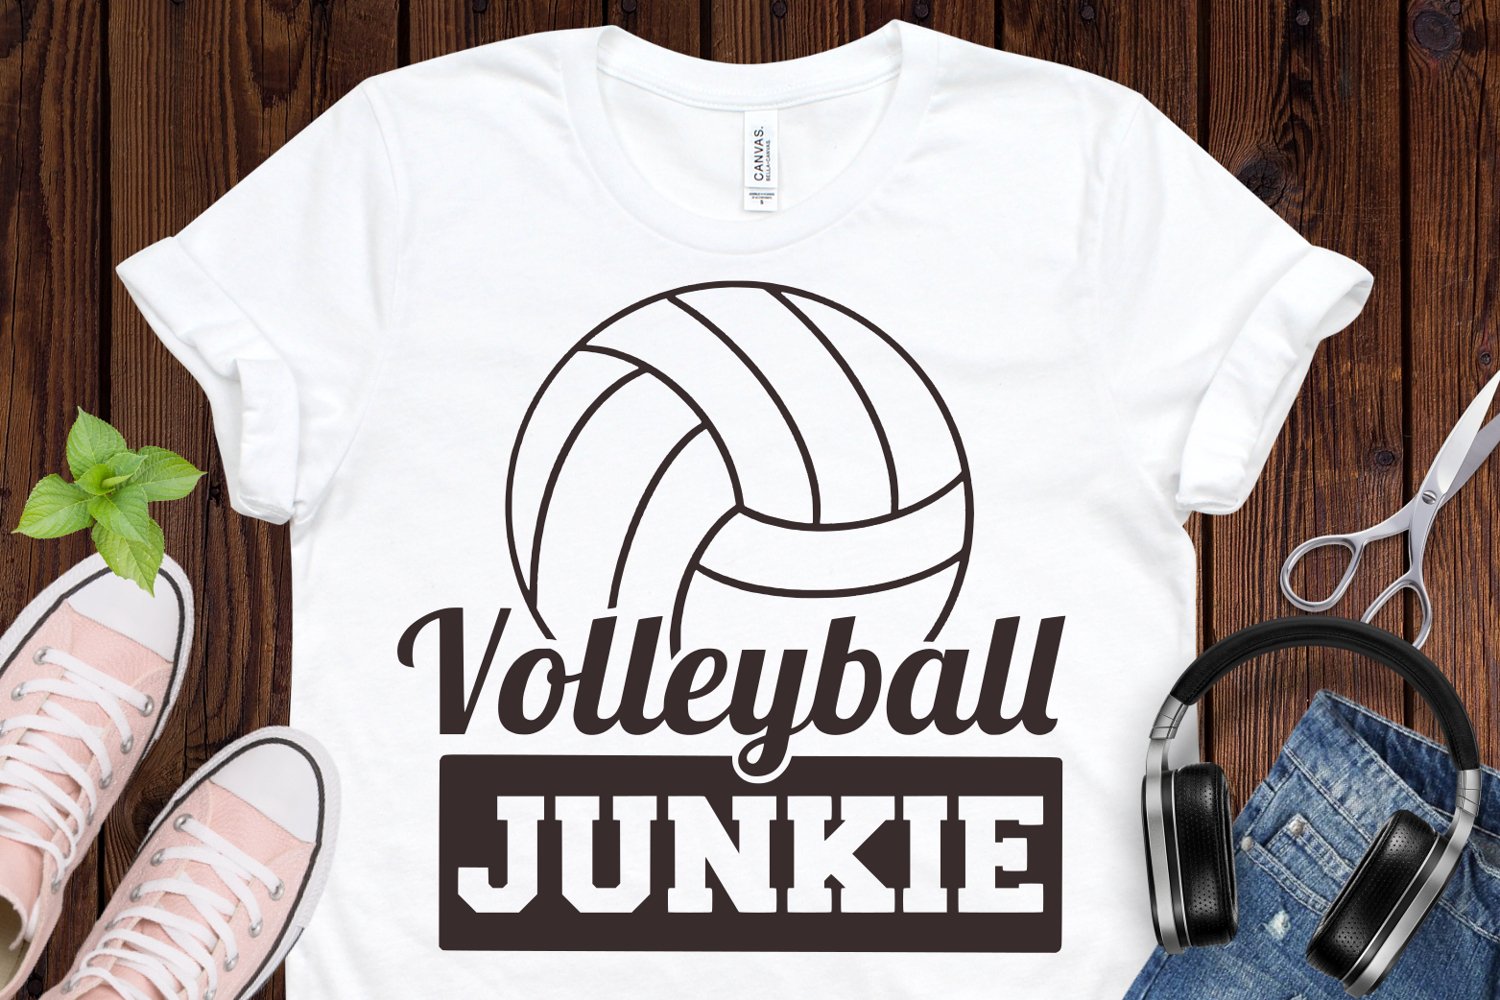 Volleyball junkie - t-shirt design.